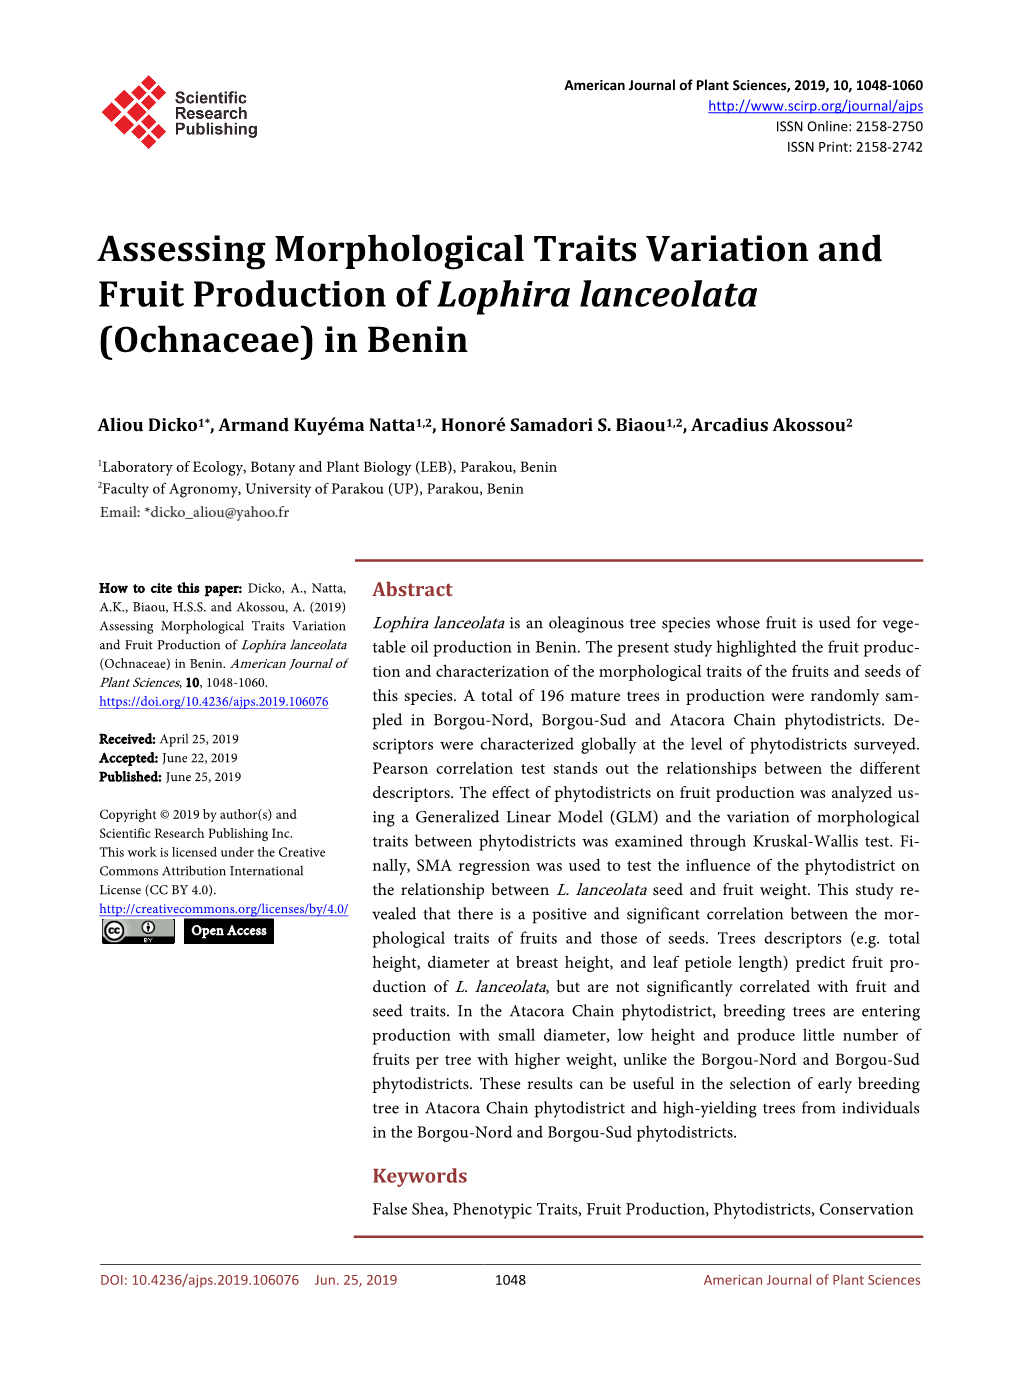 Assessing Morphological Traits Variation and Fruit Production of Lophira Lanceolata (Ochnaceae) in Benin